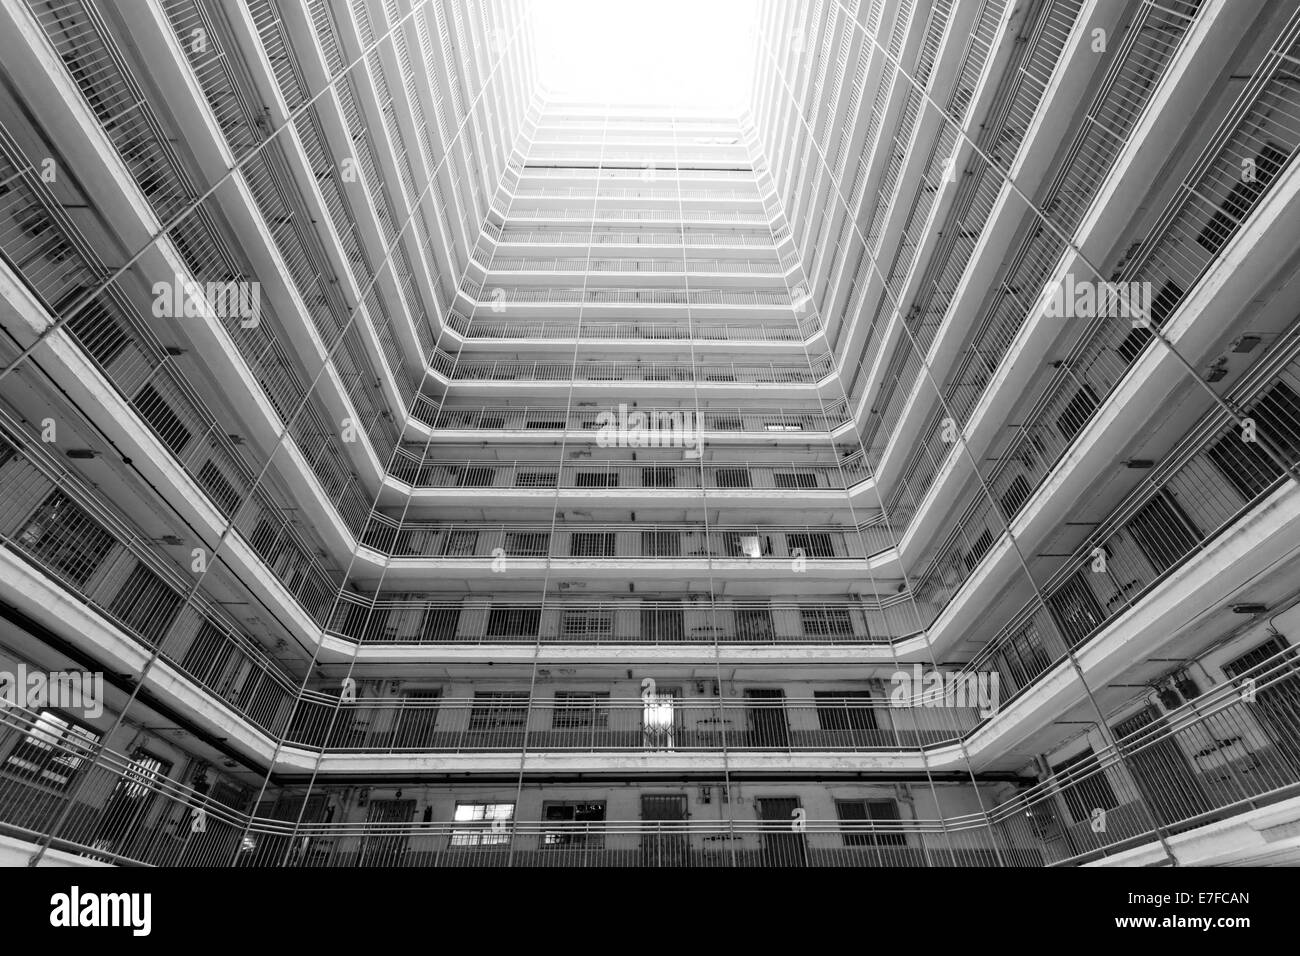 Hongkong Black and White Stock Photos & Images - Alamy